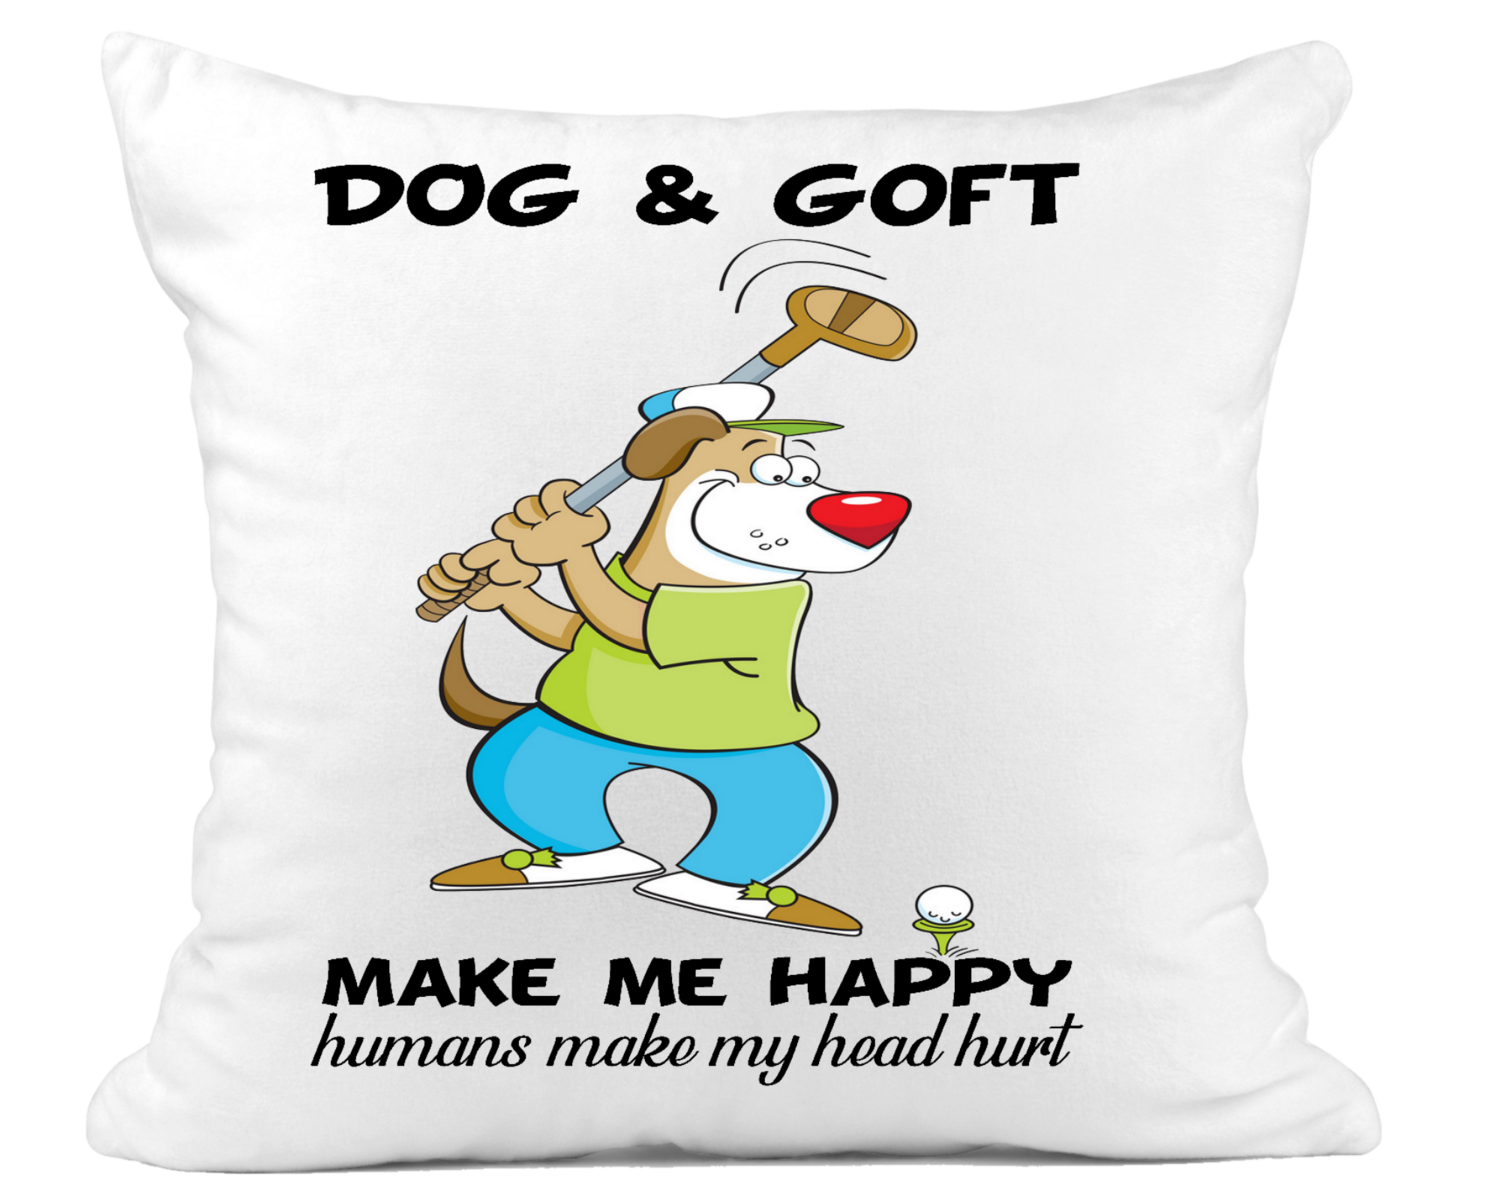 Pillow Suede Dog: DOG & GOFT MAKE ME HAPPY HUMANS MAKE MY HEAD HURT